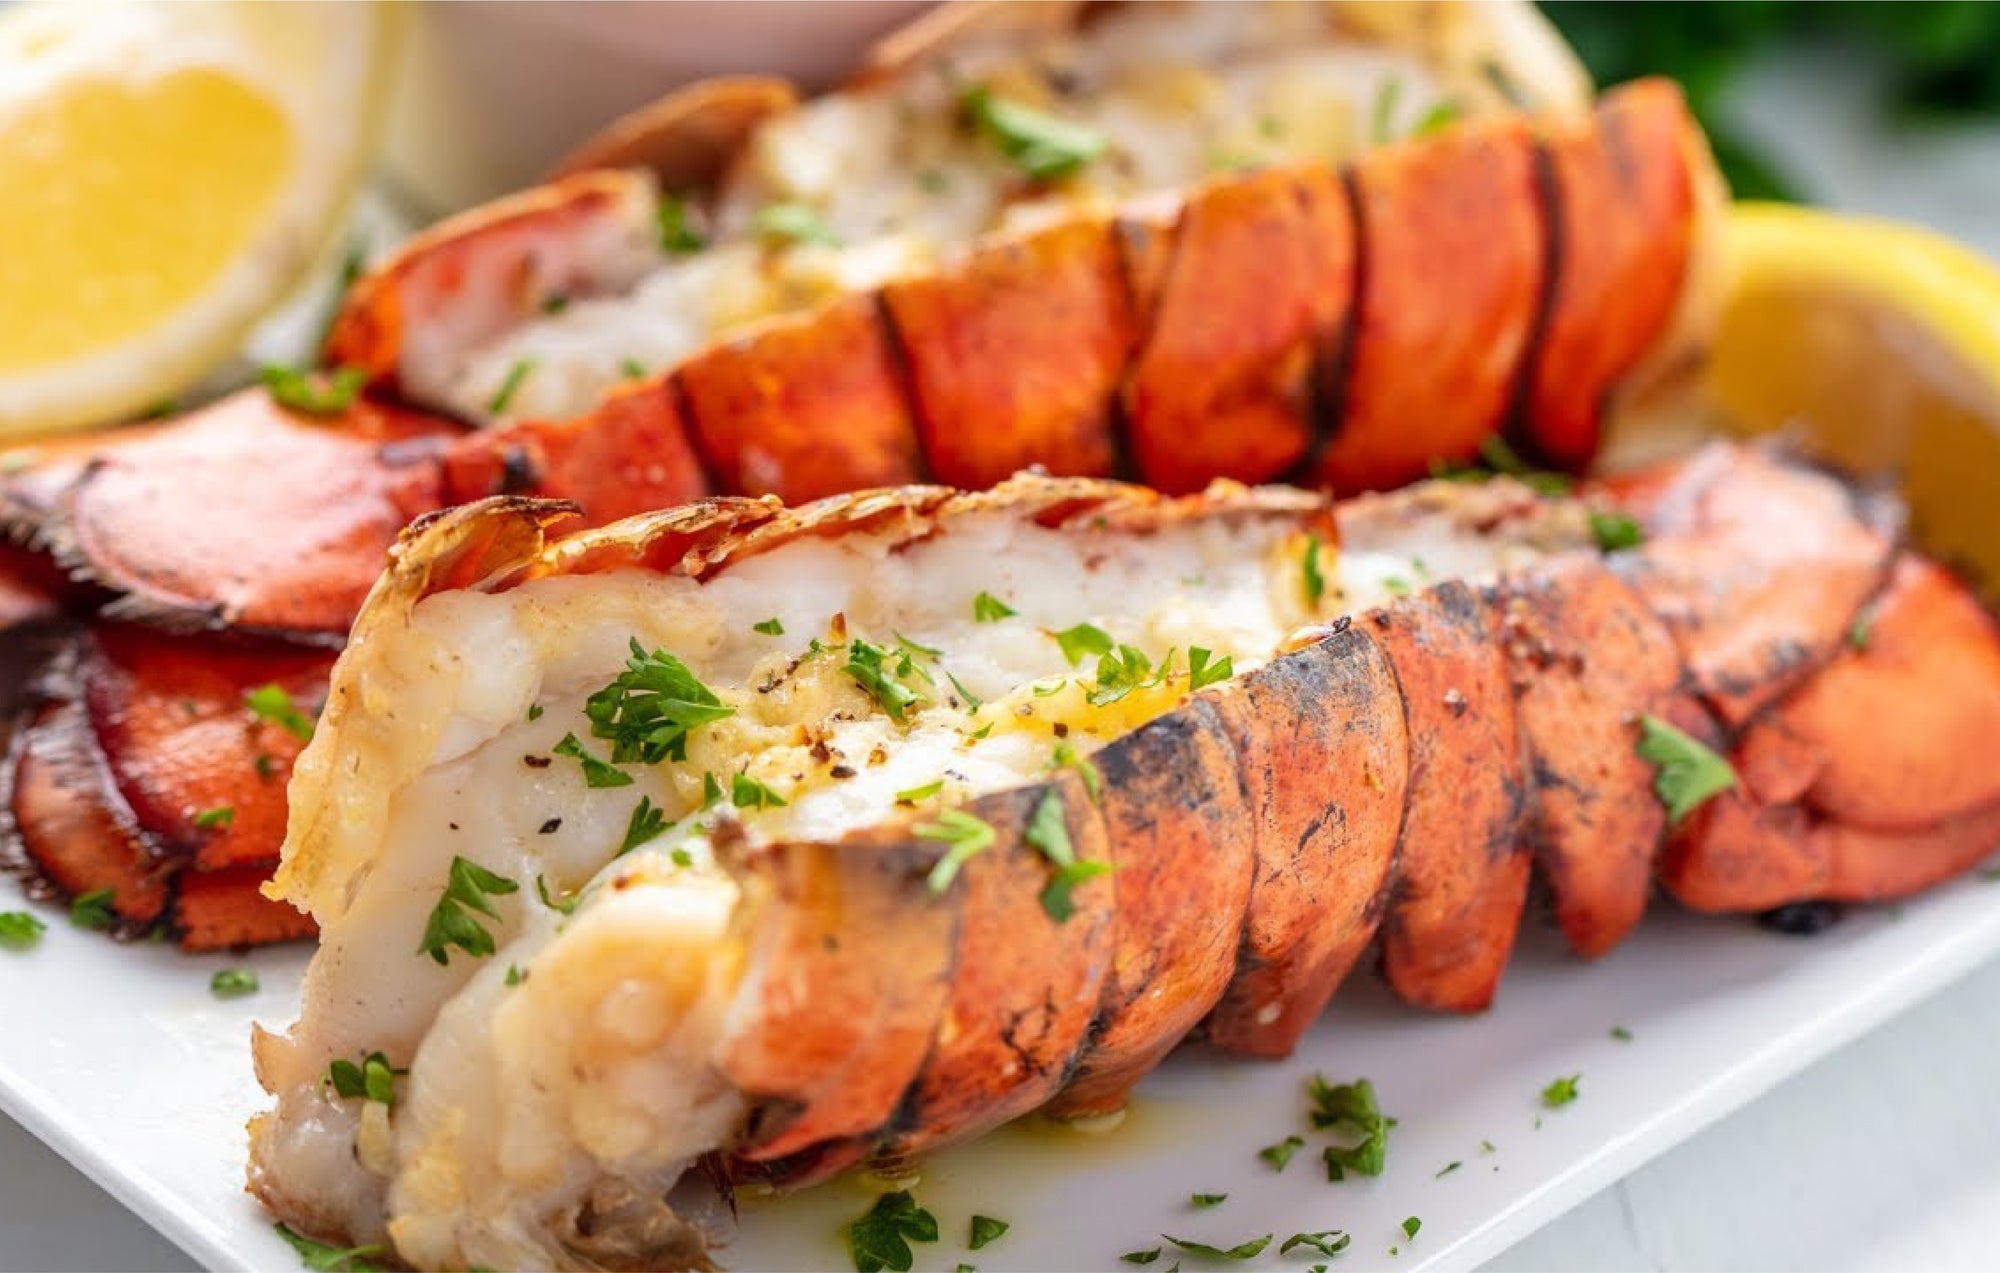 Baked Lobster ...mmm!